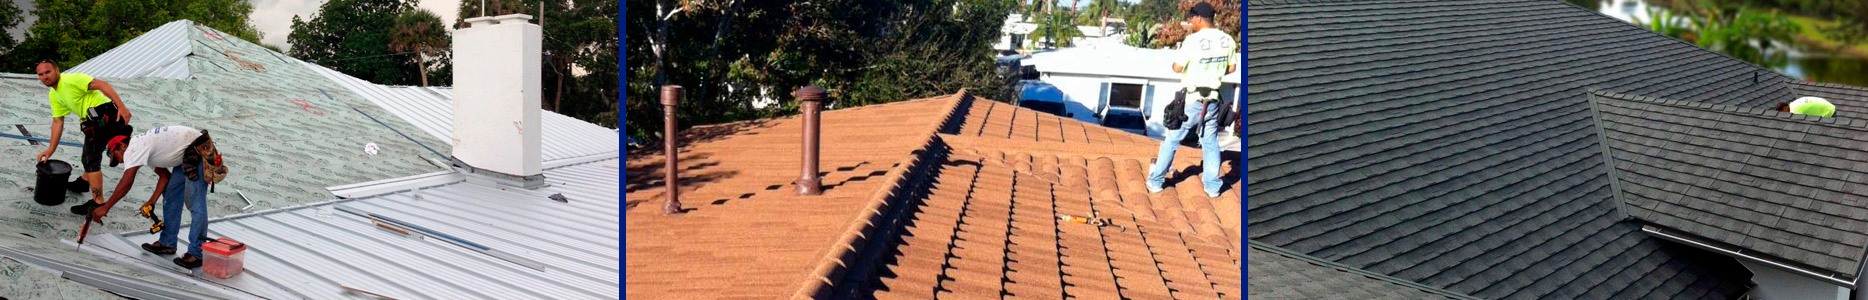 Residential roofing header